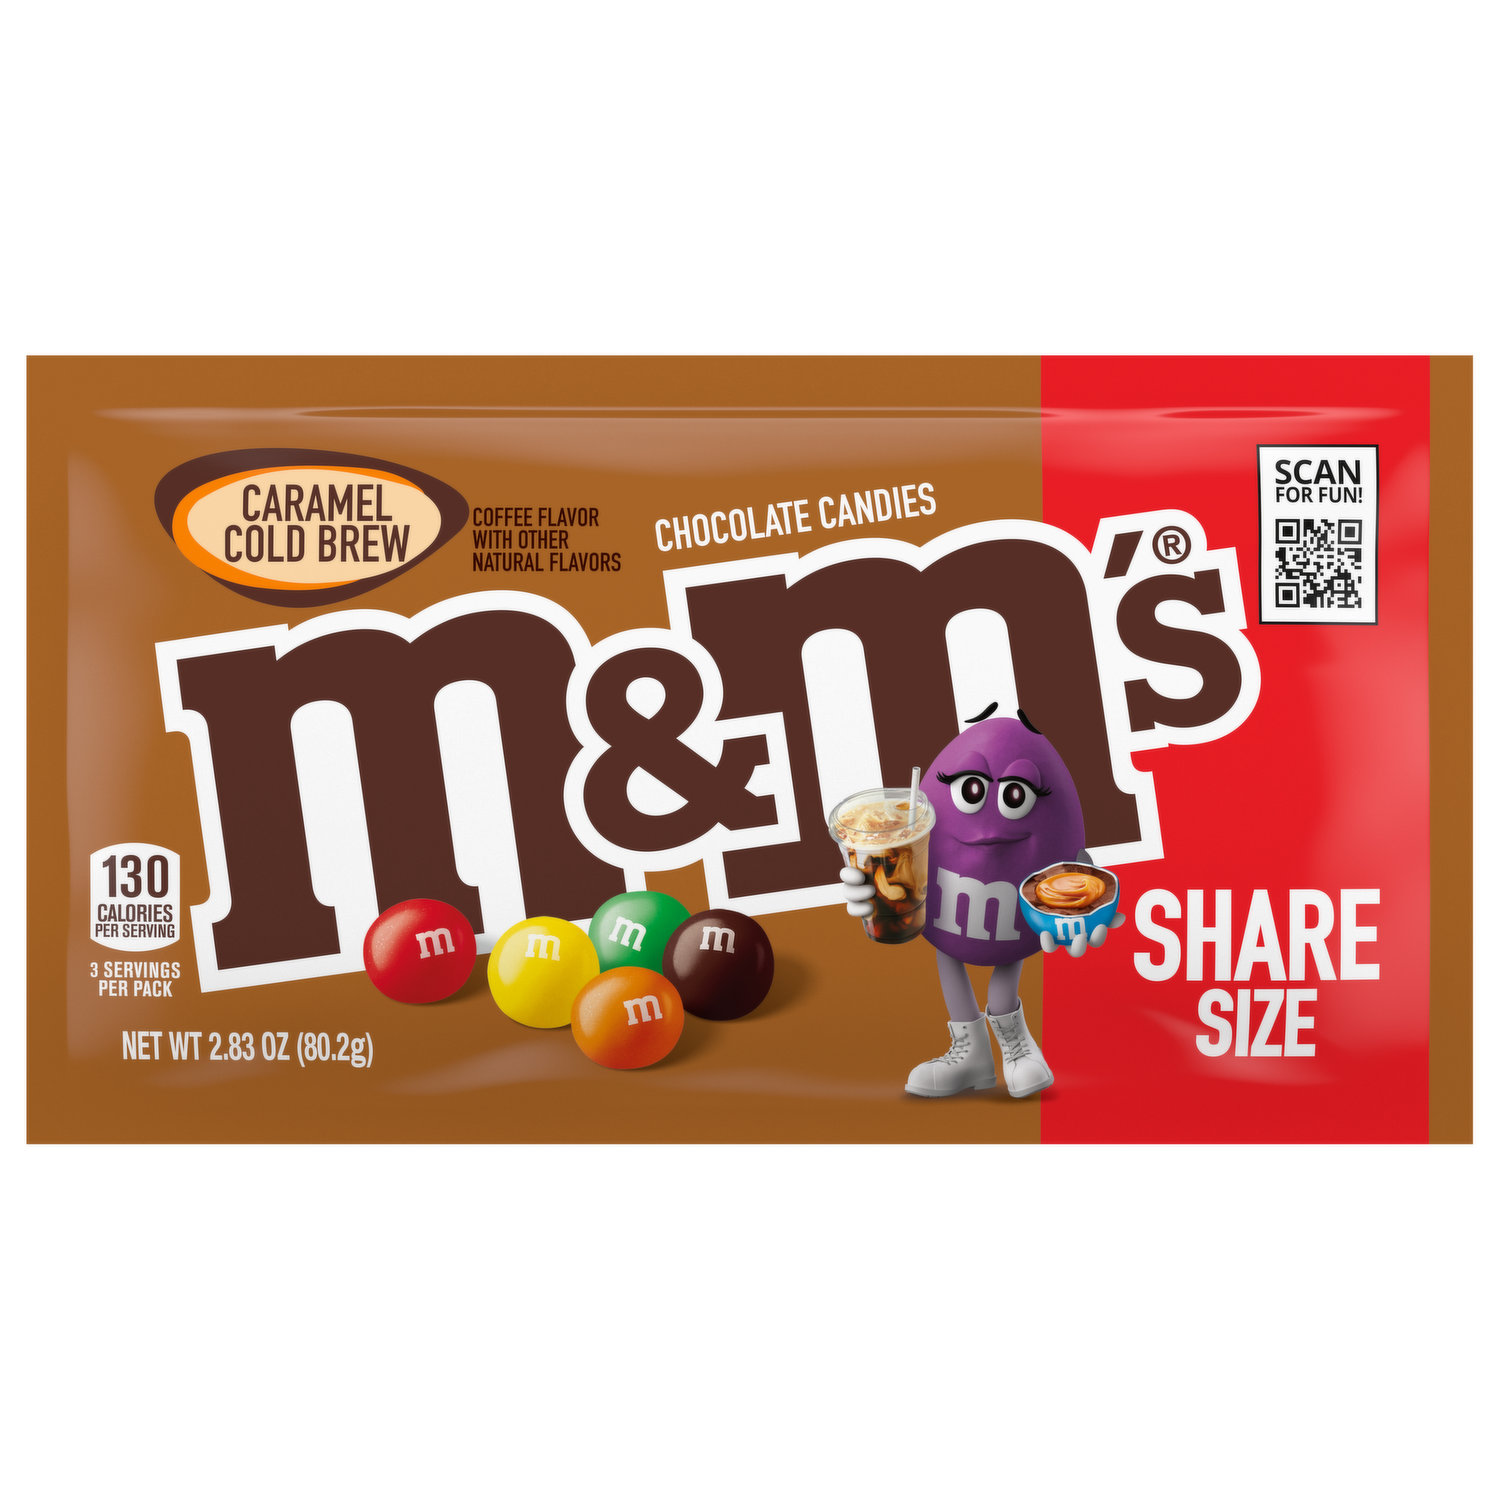  M&M'S Peanut Milk Chocolate, Sharing Size, 10.05 oz